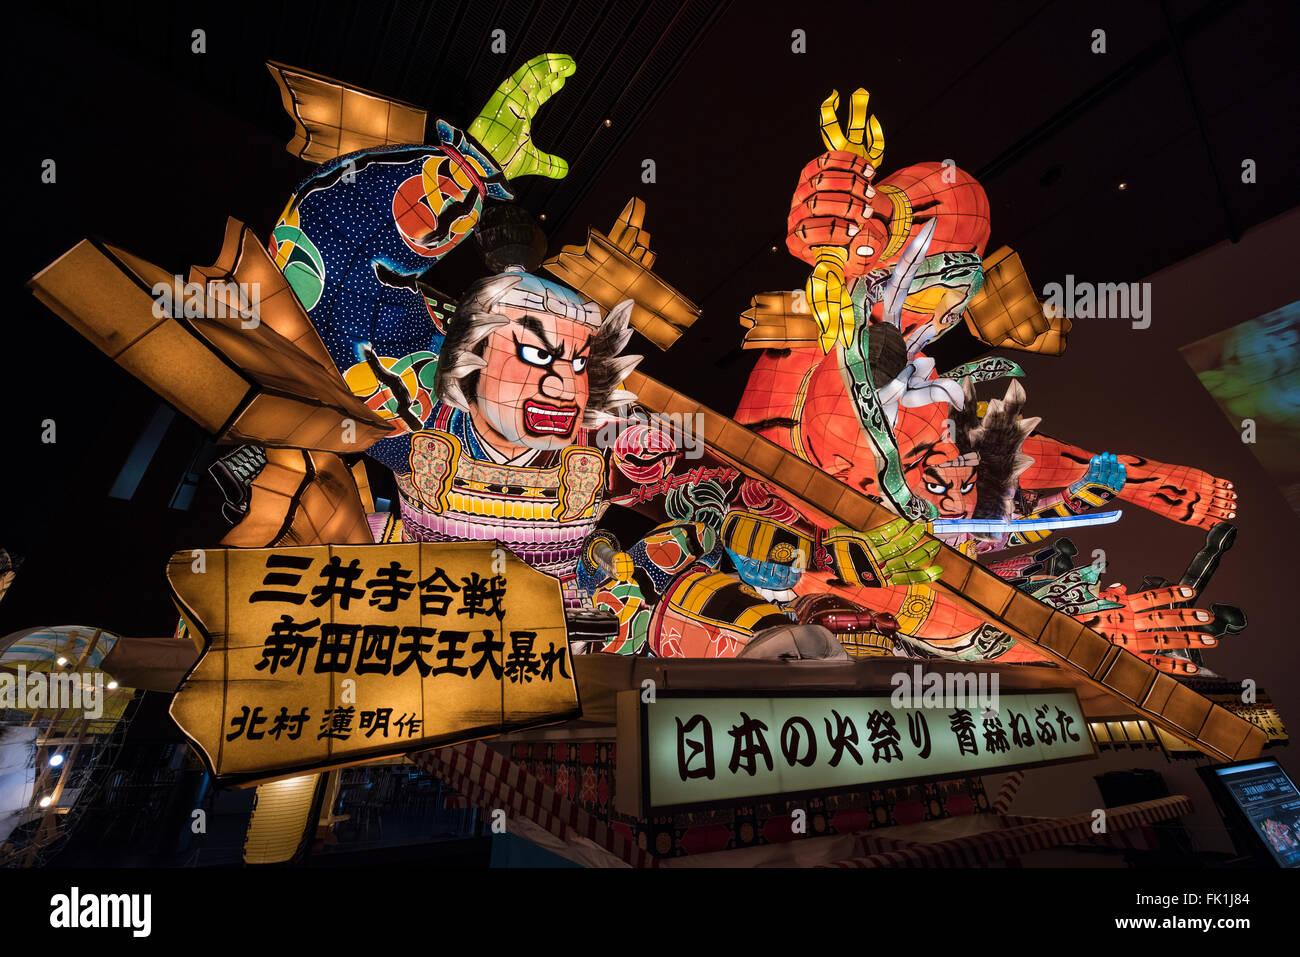 Nebuta Festival Float in the Nebuta Museum Wa rasse, Aomori, Japan Stock Photo